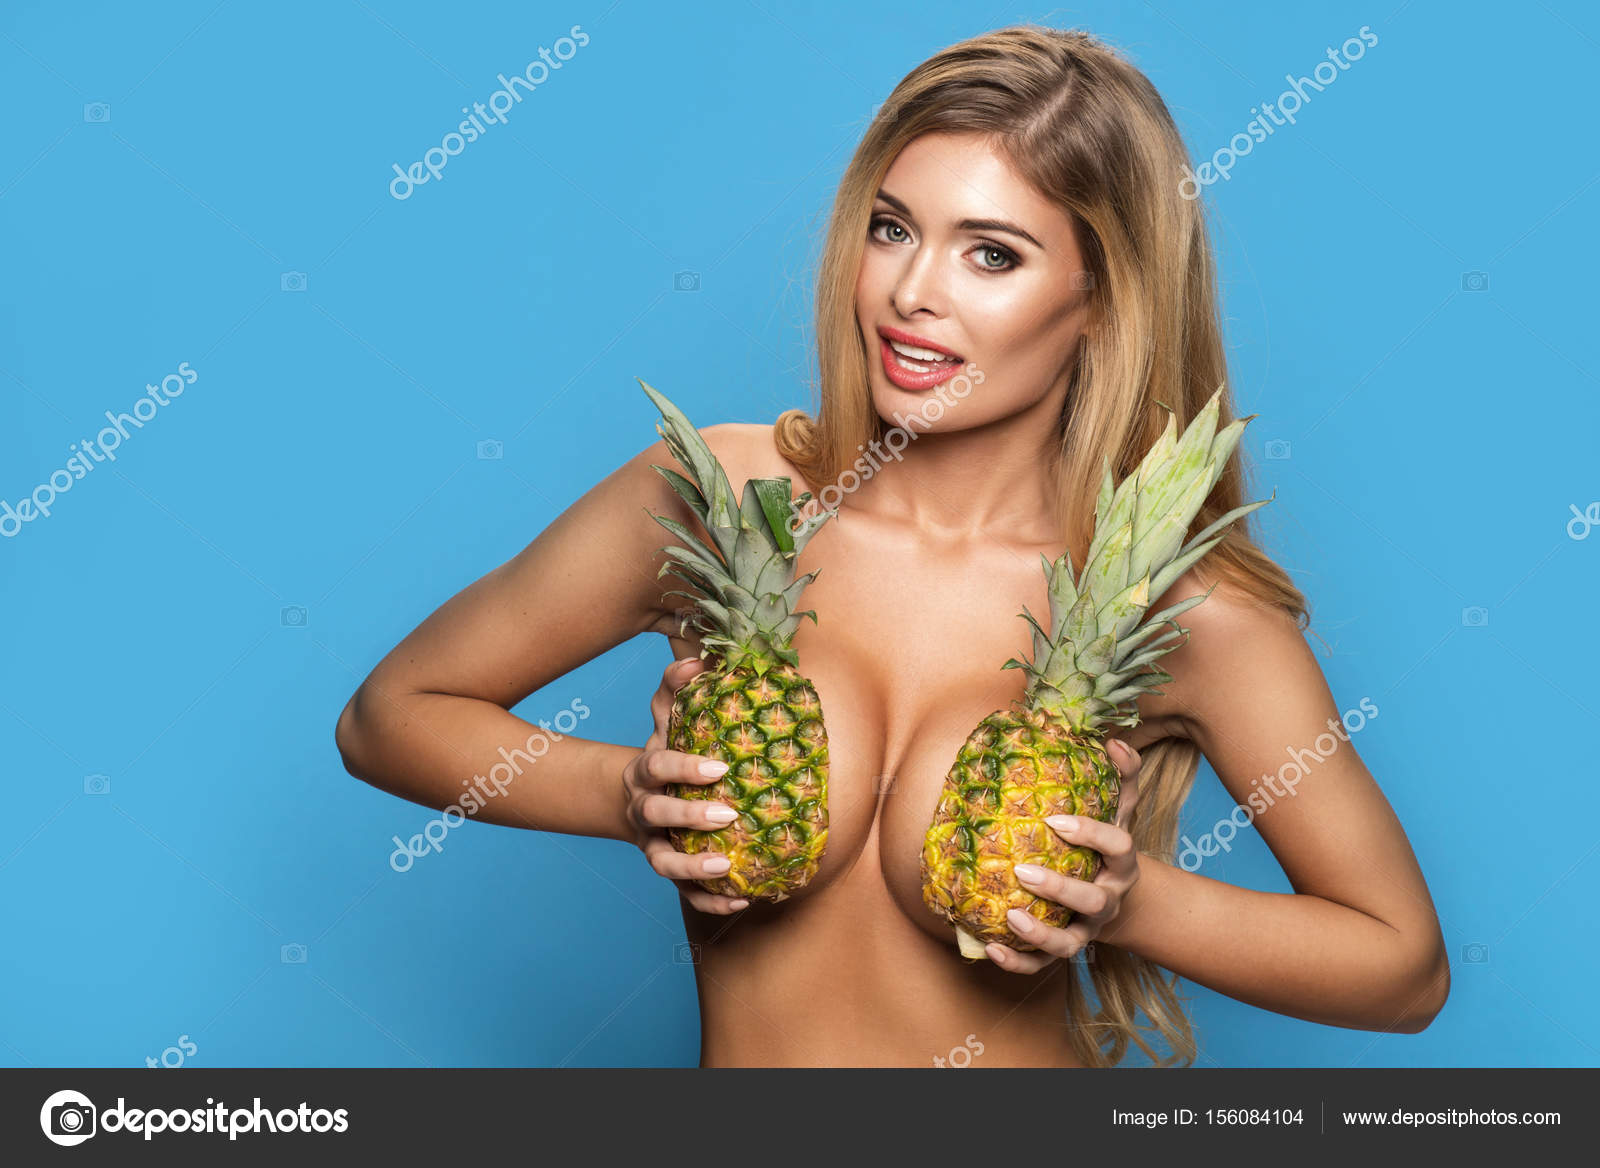 depositphotos_156084104-stock-photo-sexy-woman-with-pineapple.jpg